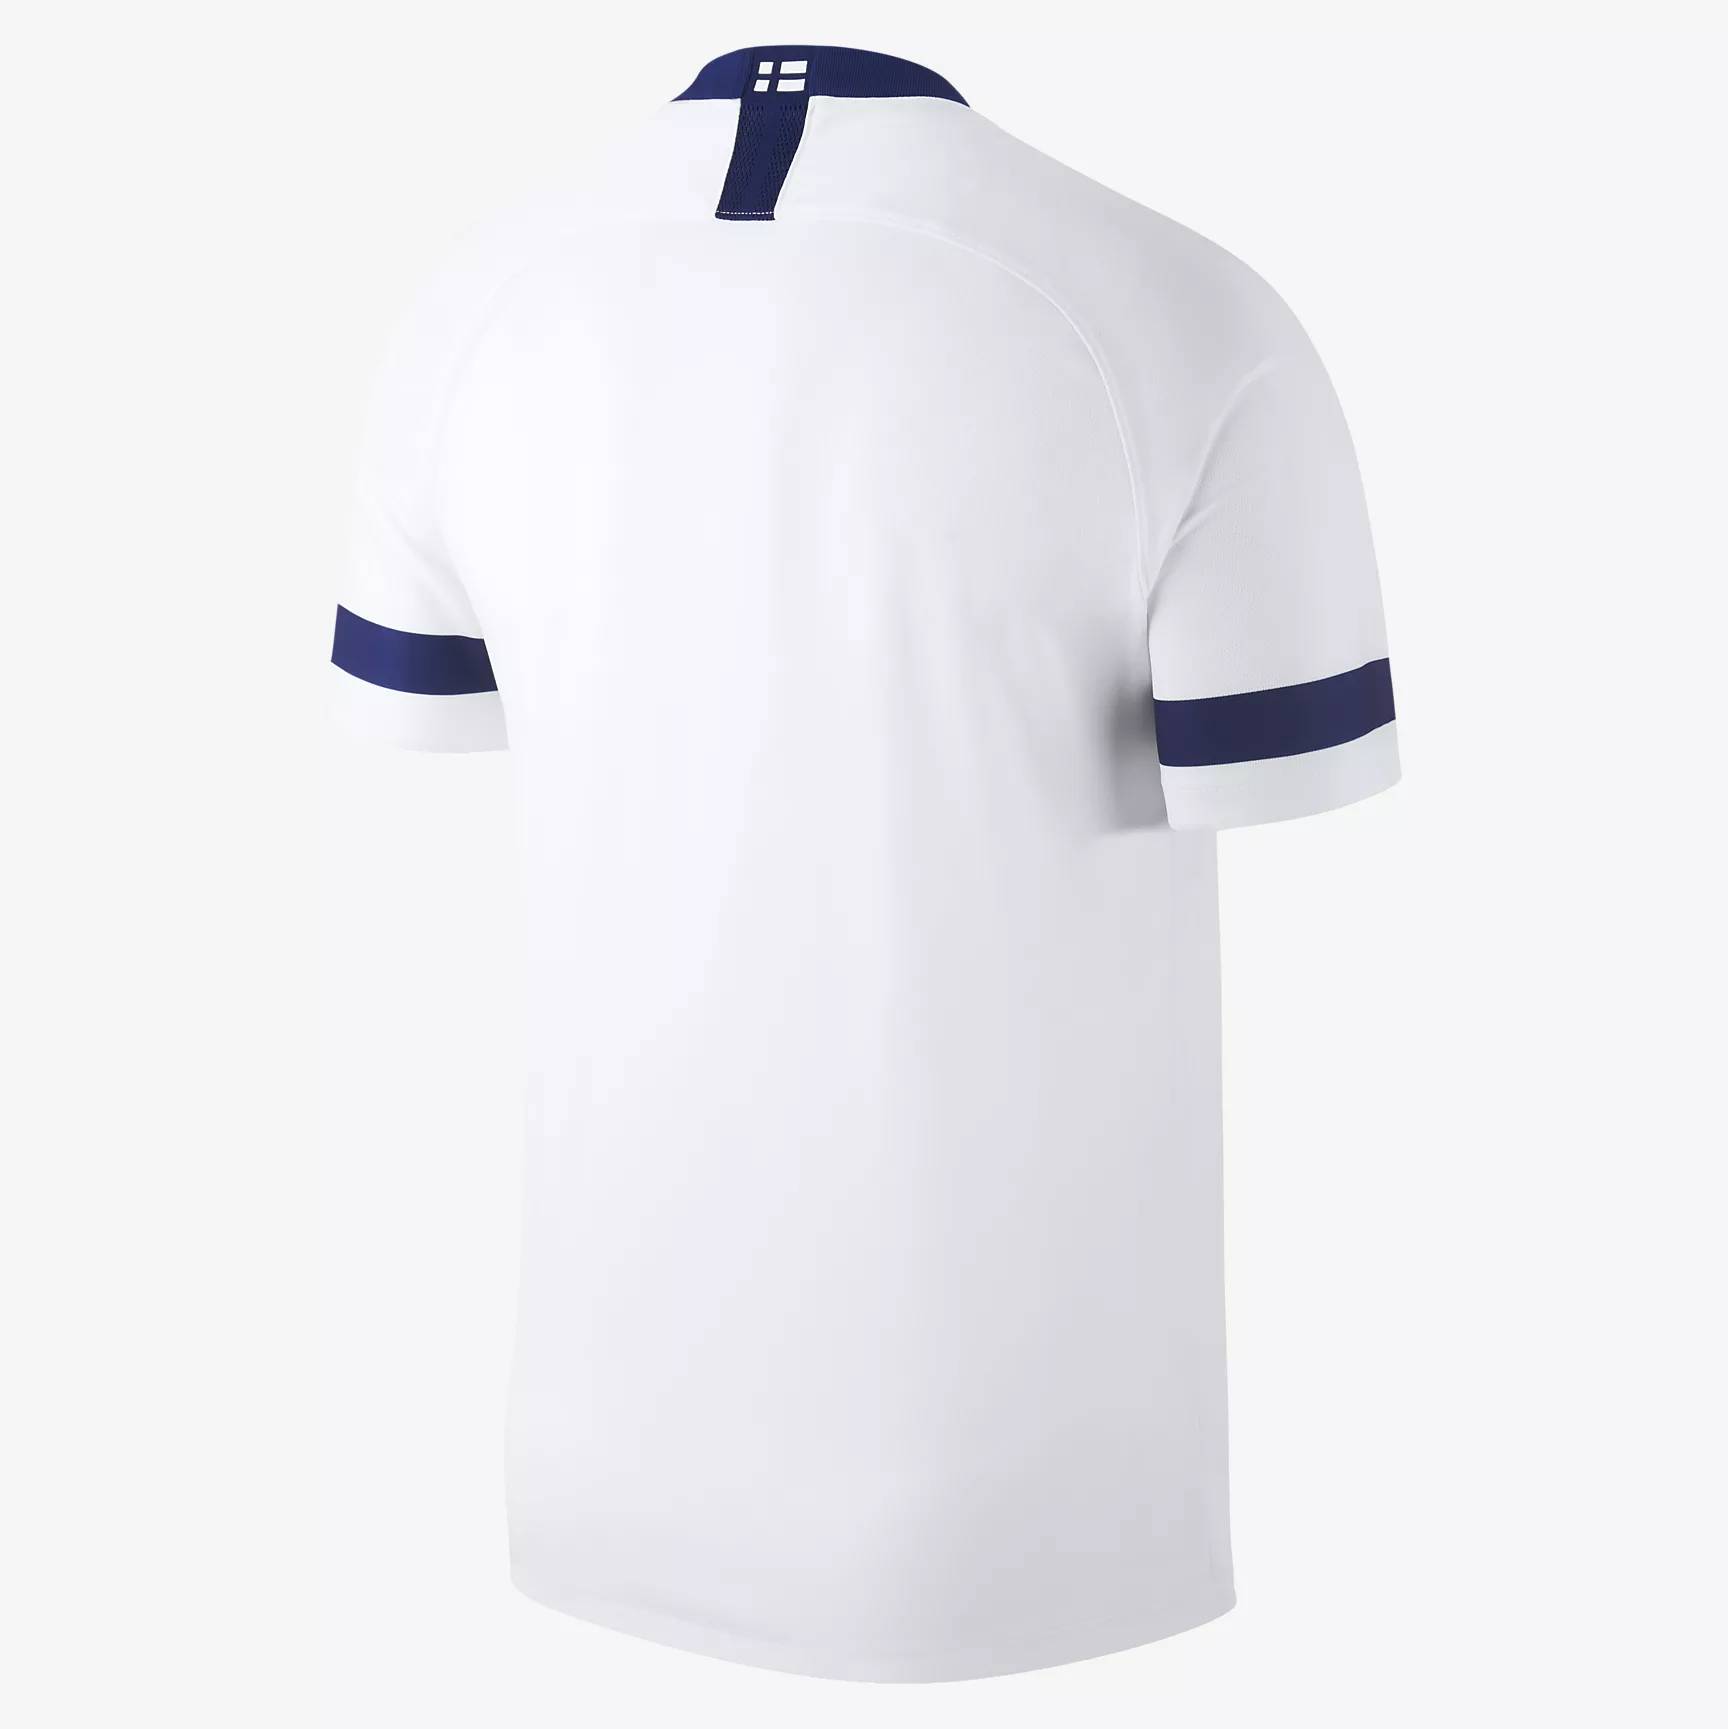 Finland 2018 Nike Home Kit - 18/19 Kits - Football shirt blog